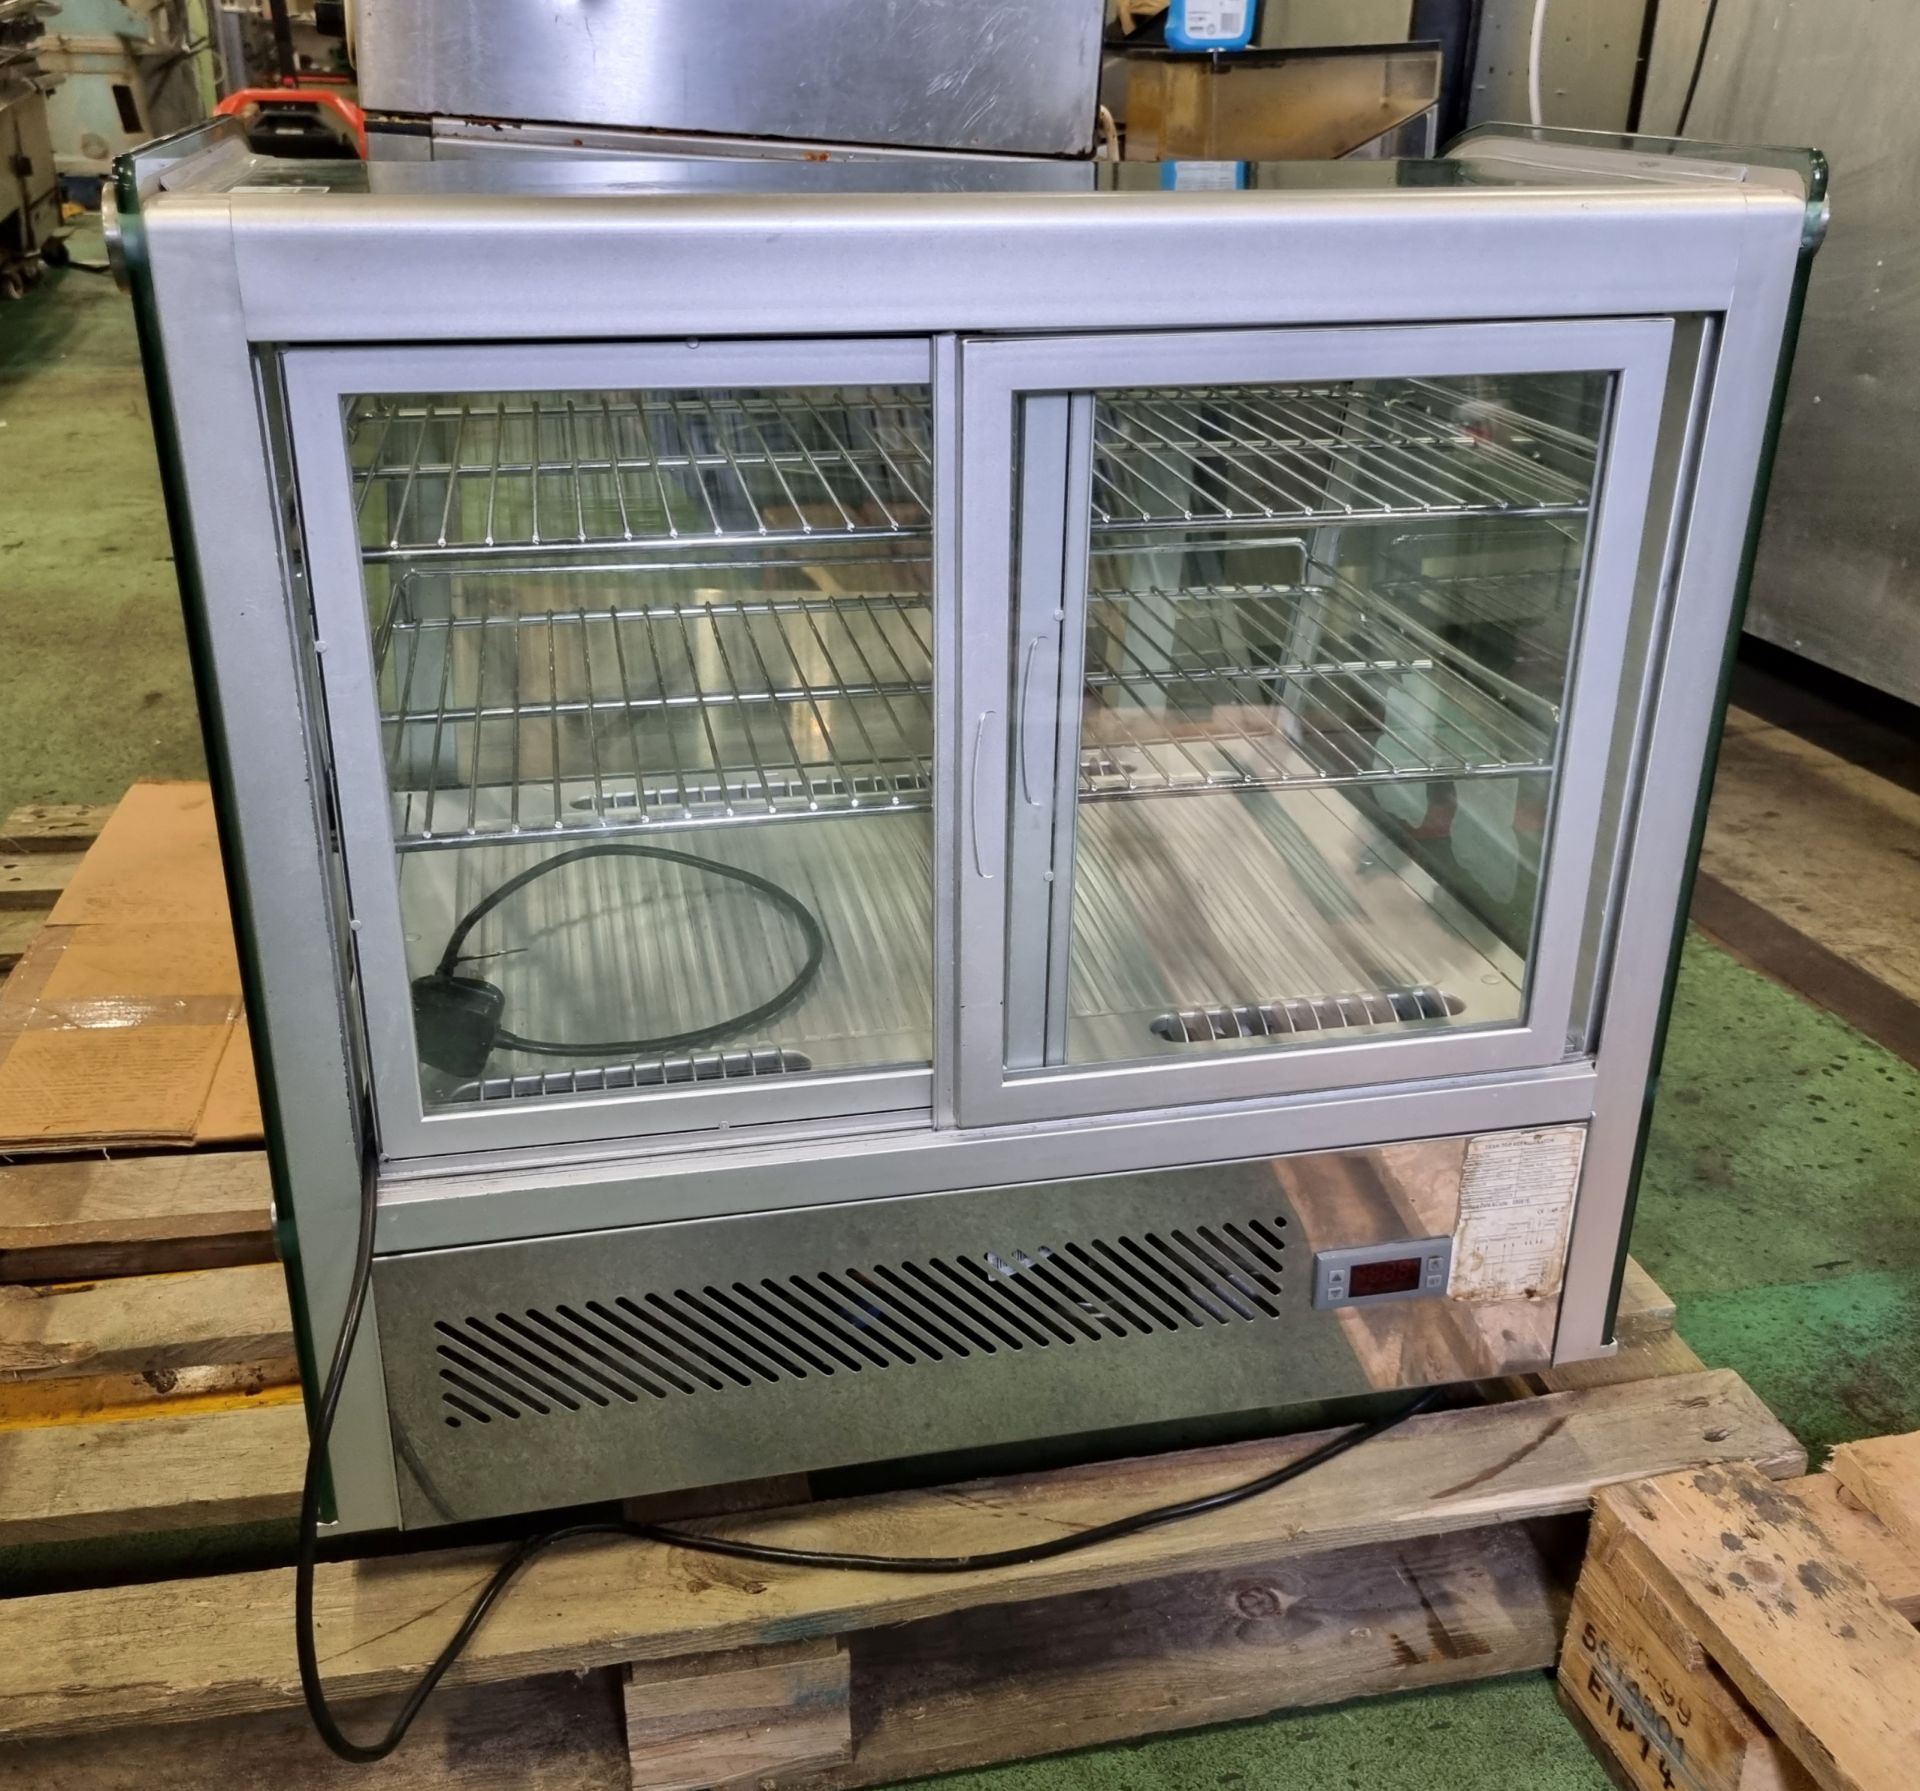 RTW-120L counter top refrigerated display unit - W 700 x D 570 x H 690mm